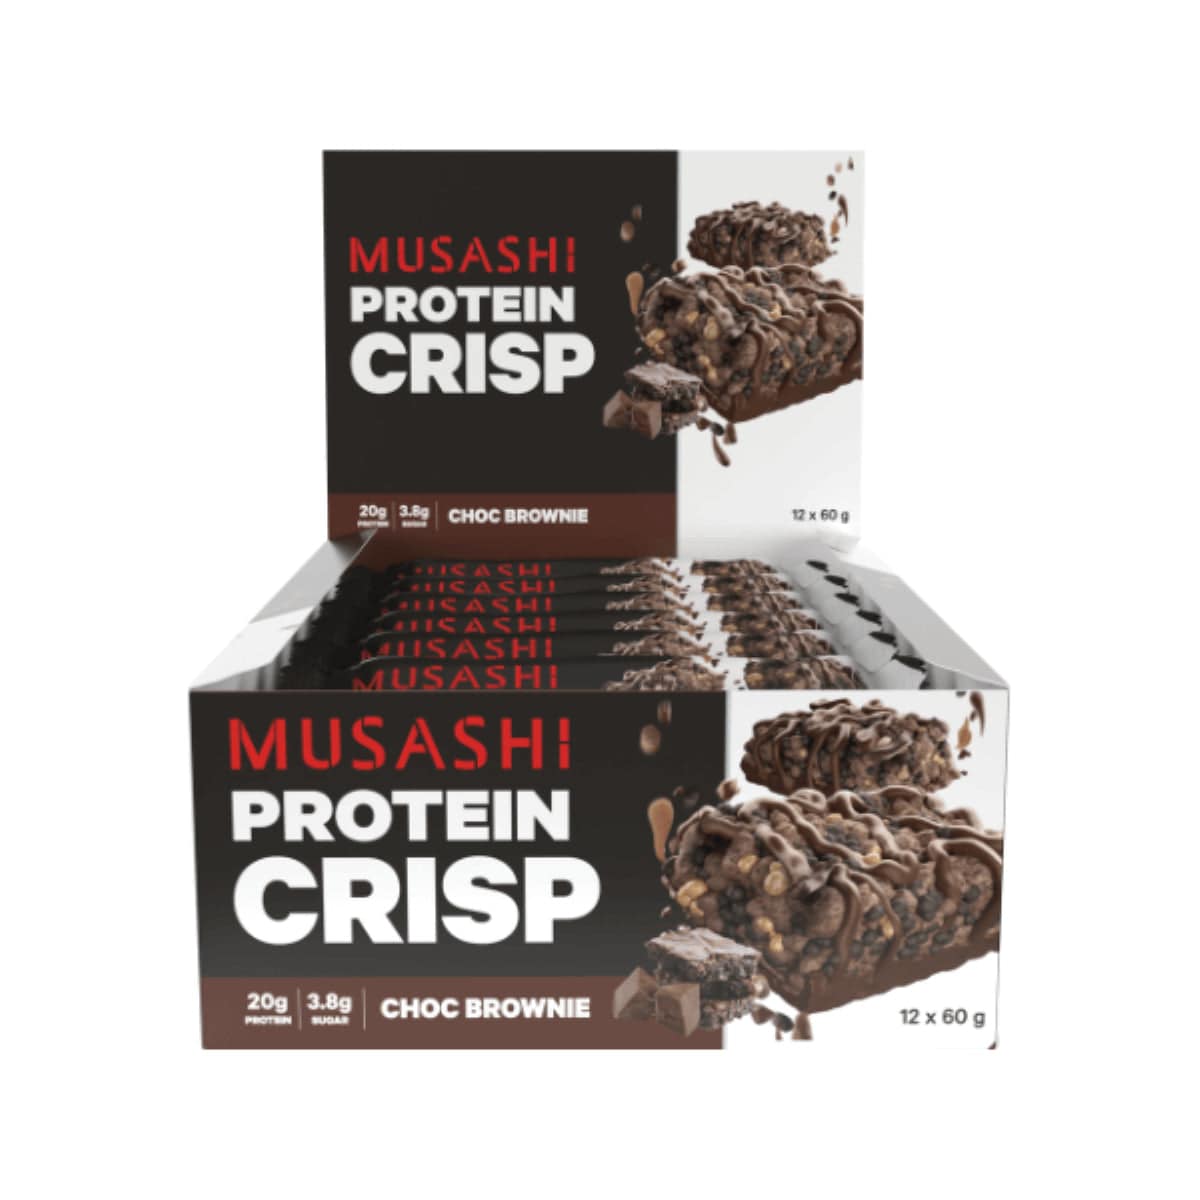 Musashi Protein Crisp Bar Choc Brownie 12 x 60g Australia